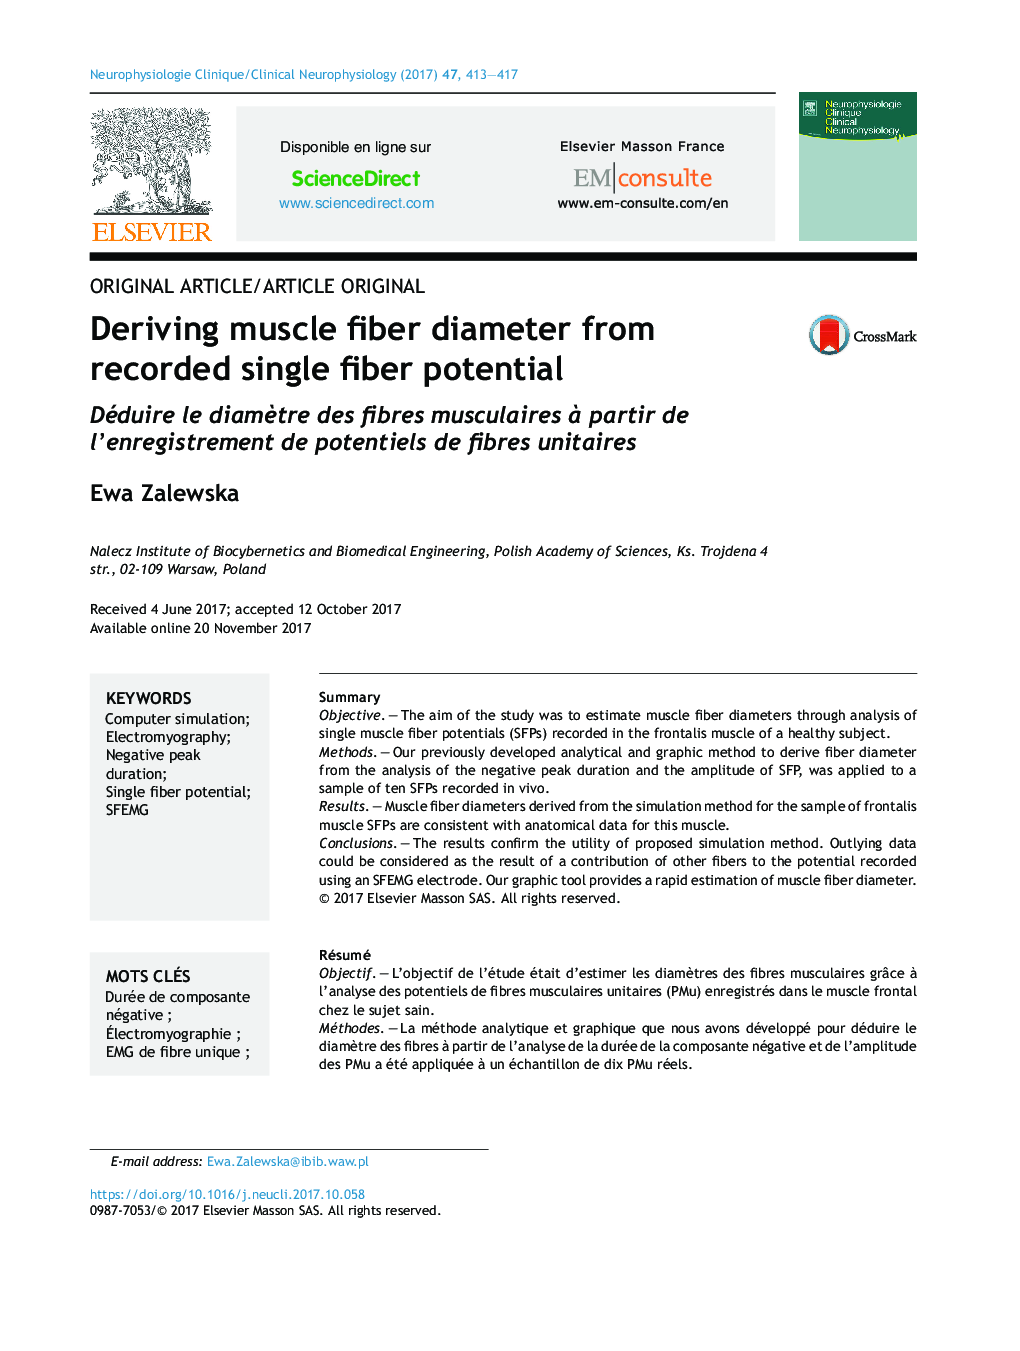 Deriving muscle fiber diameter from recorded single fiber potential